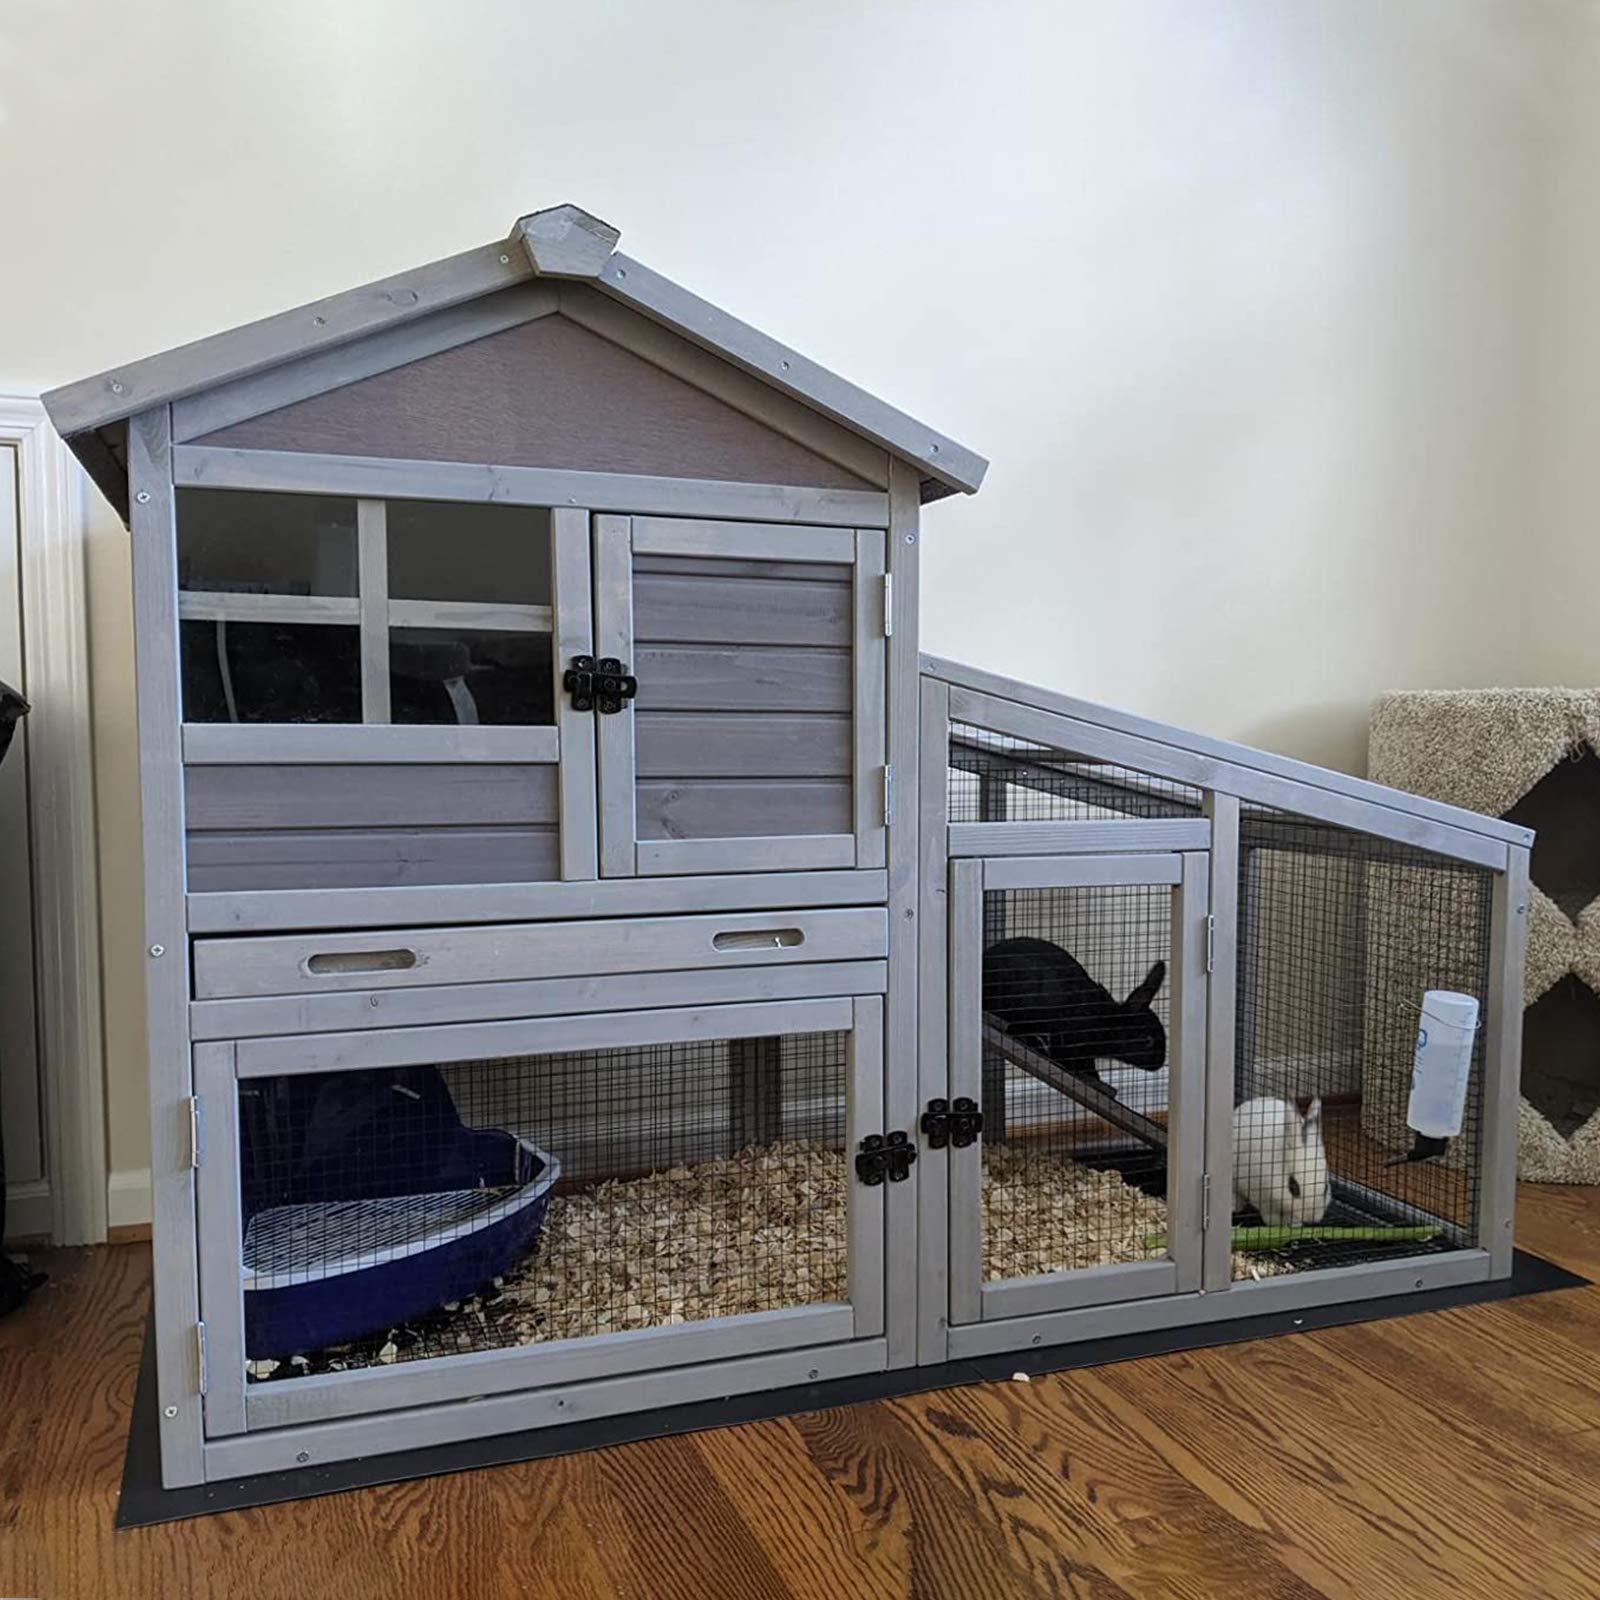 gutinneen Rabbit House Indoor Outdoor Rabbit Hutch with Ventilation DoorWooden Bunny cage with No LeakageTray Removable Bottom W